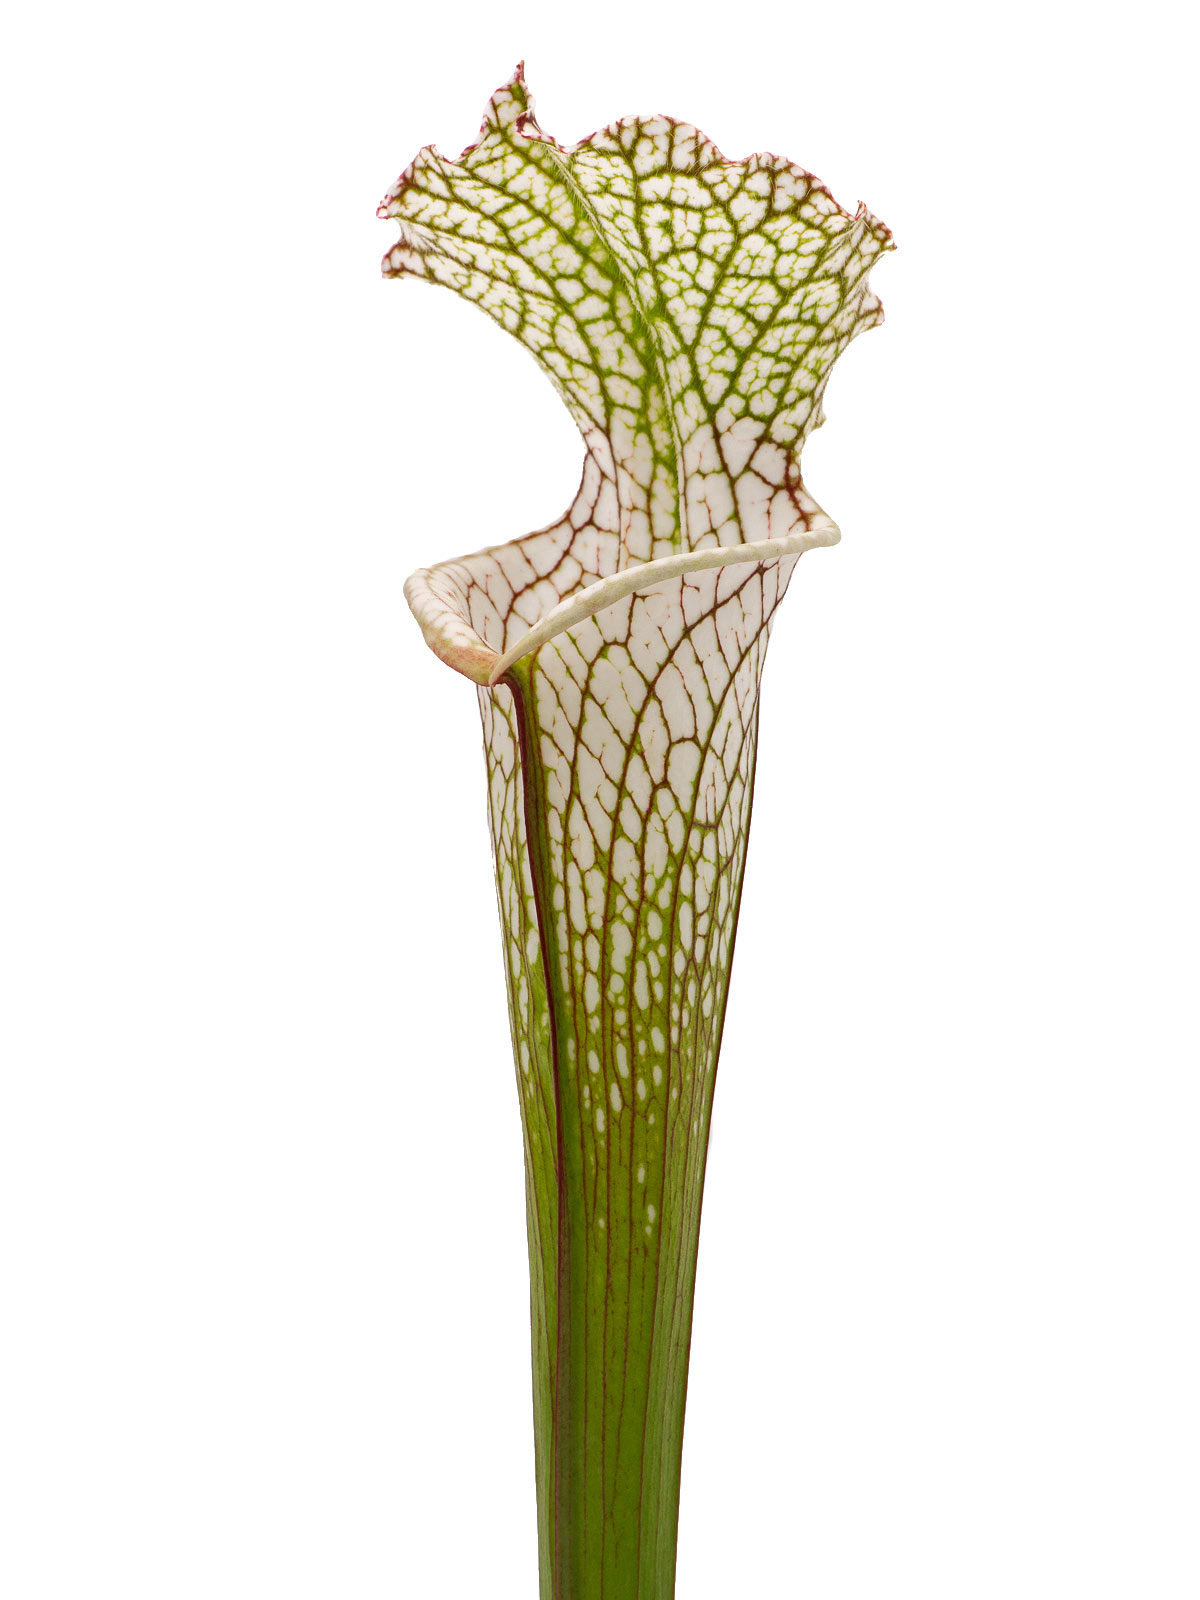 Sarracenia leucophylla - Dr. Eberhad König, Clone A